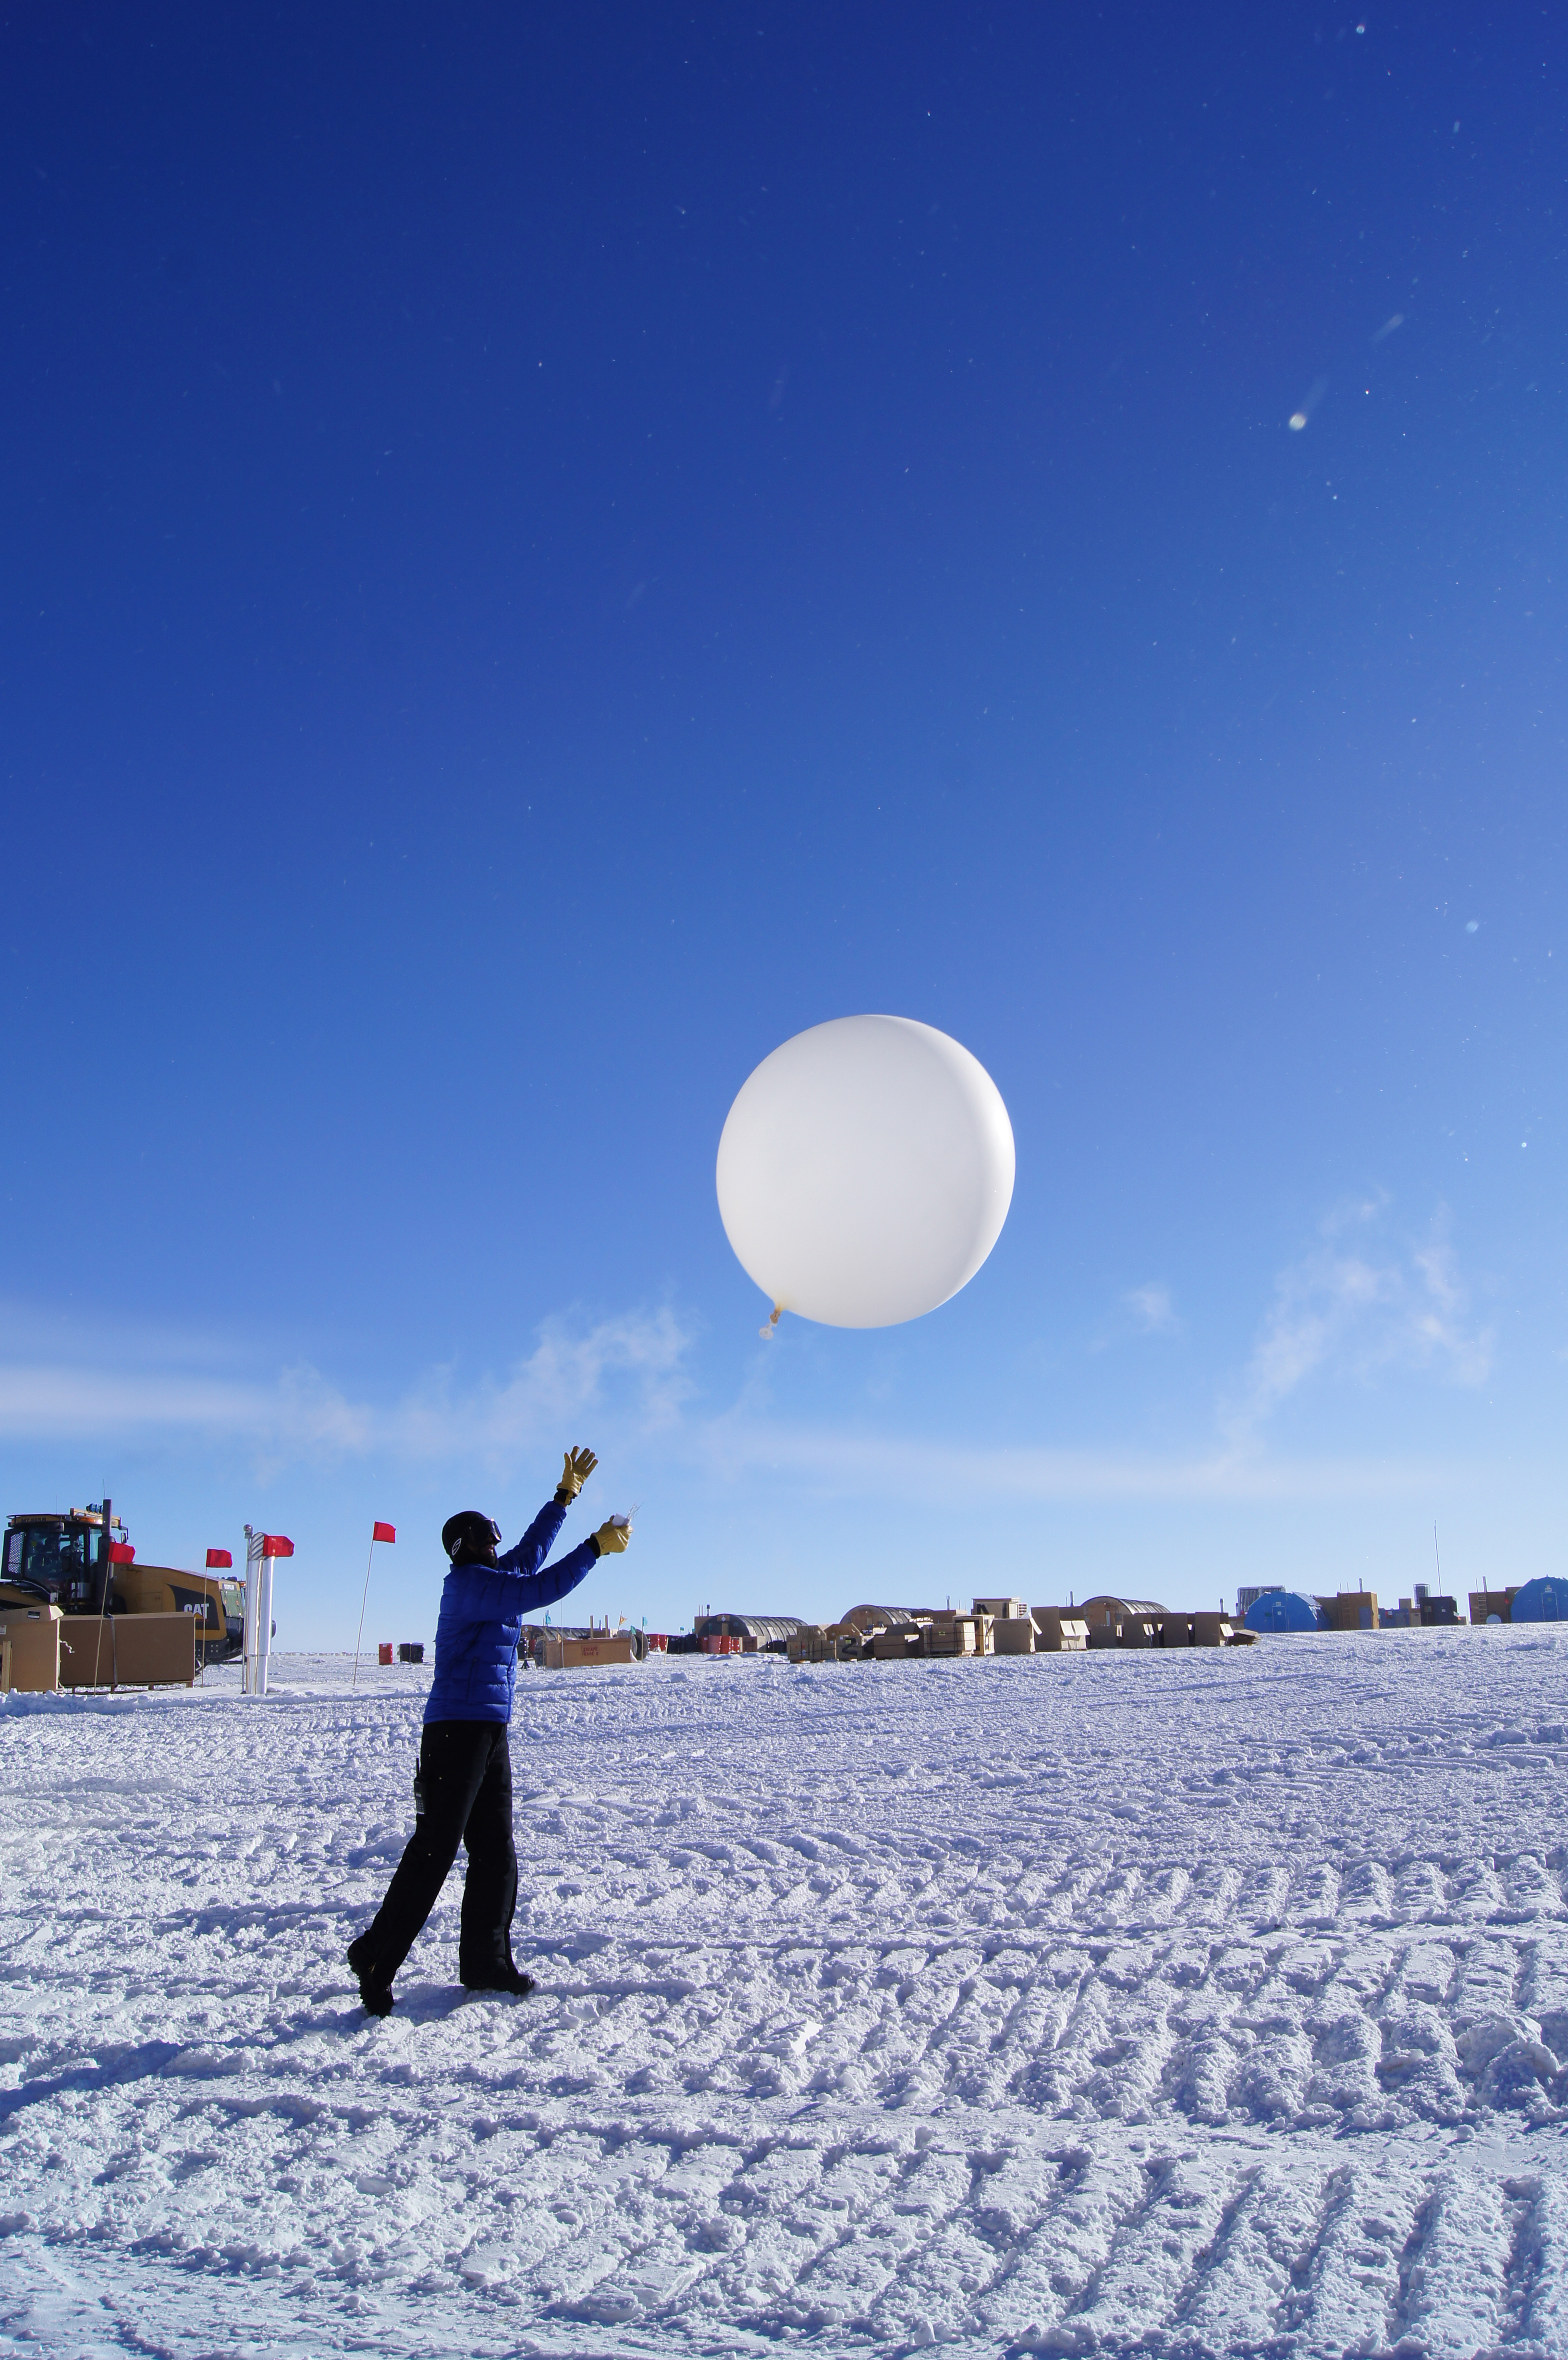 A person launches a balloon.